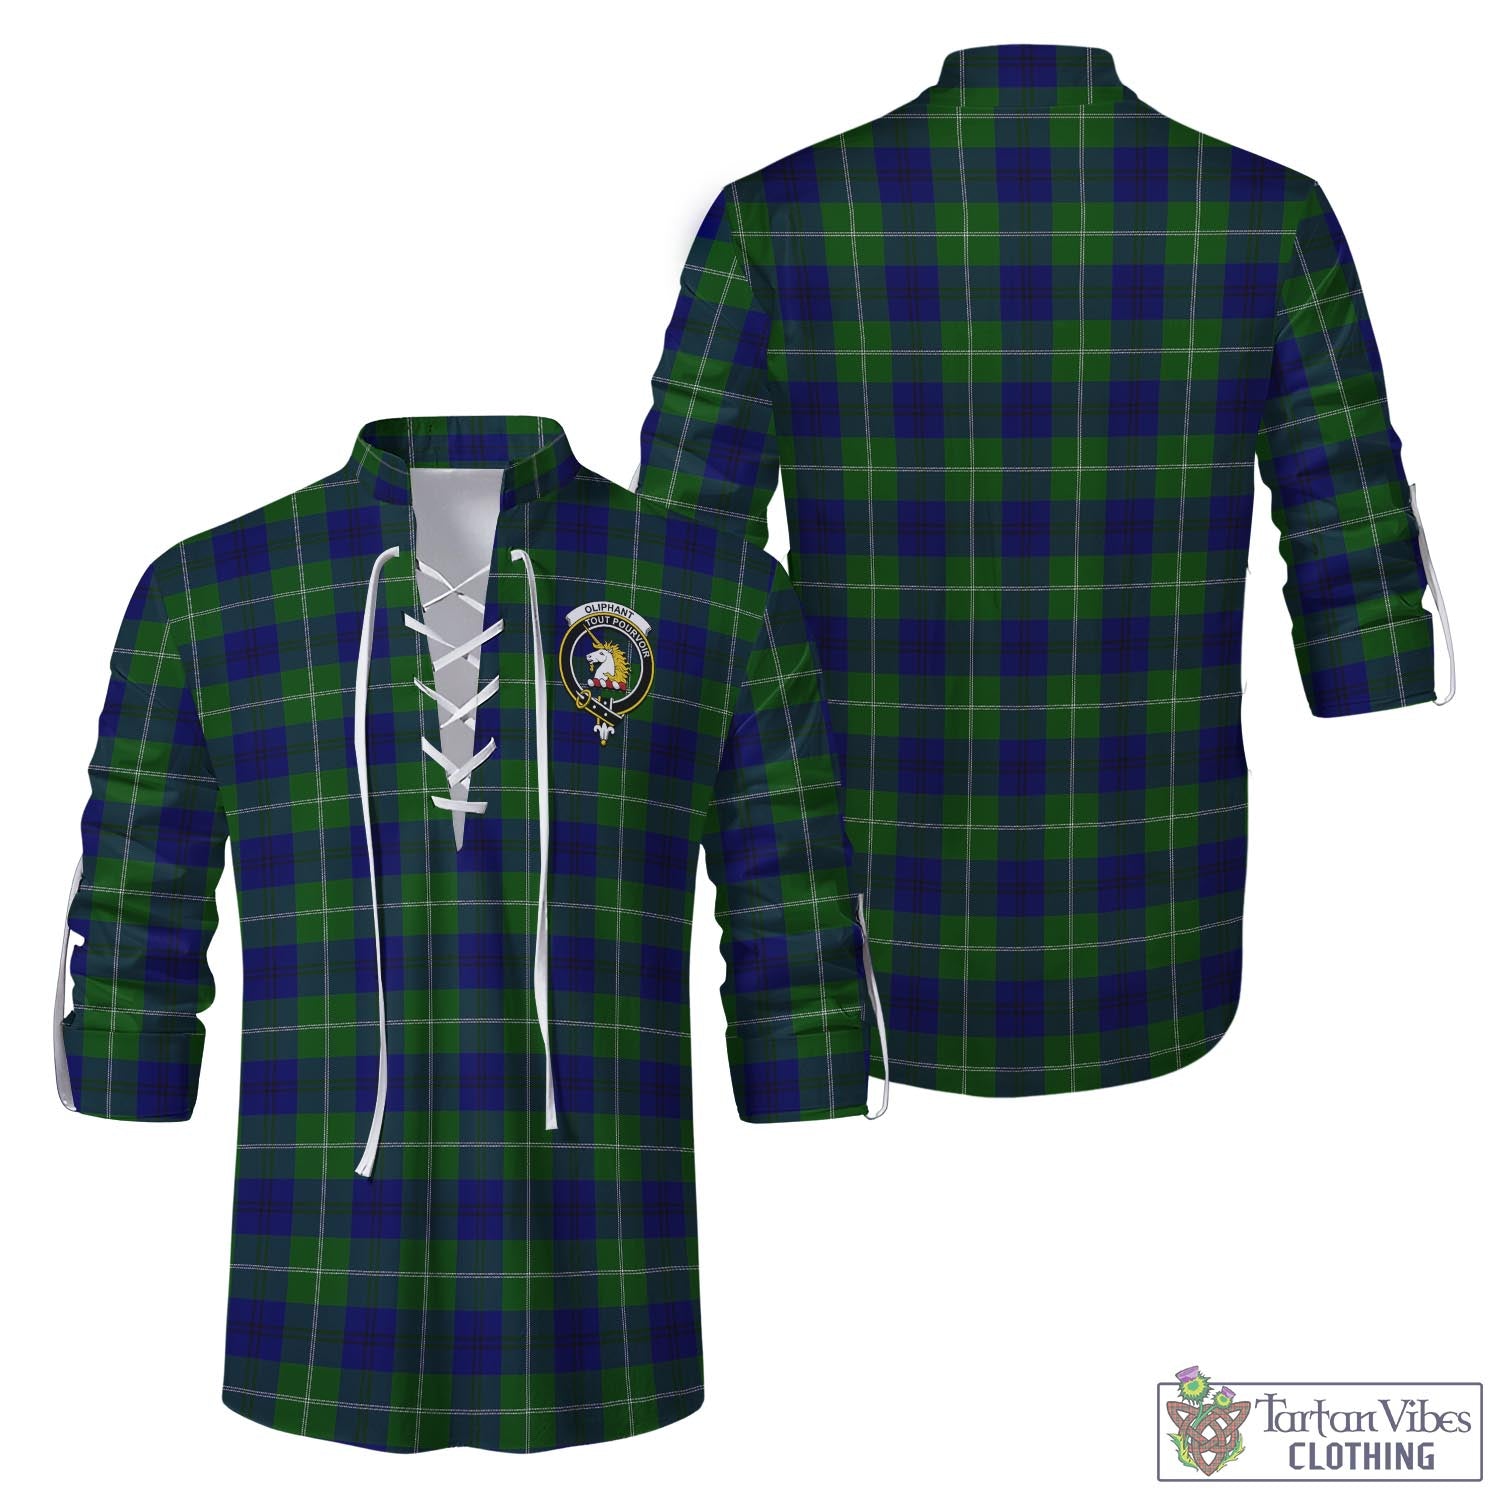 Tartan Vibes Clothing Oliphant Modern Tartan Men's Scottish Traditional Jacobite Ghillie Kilt Shirt with Family Crest